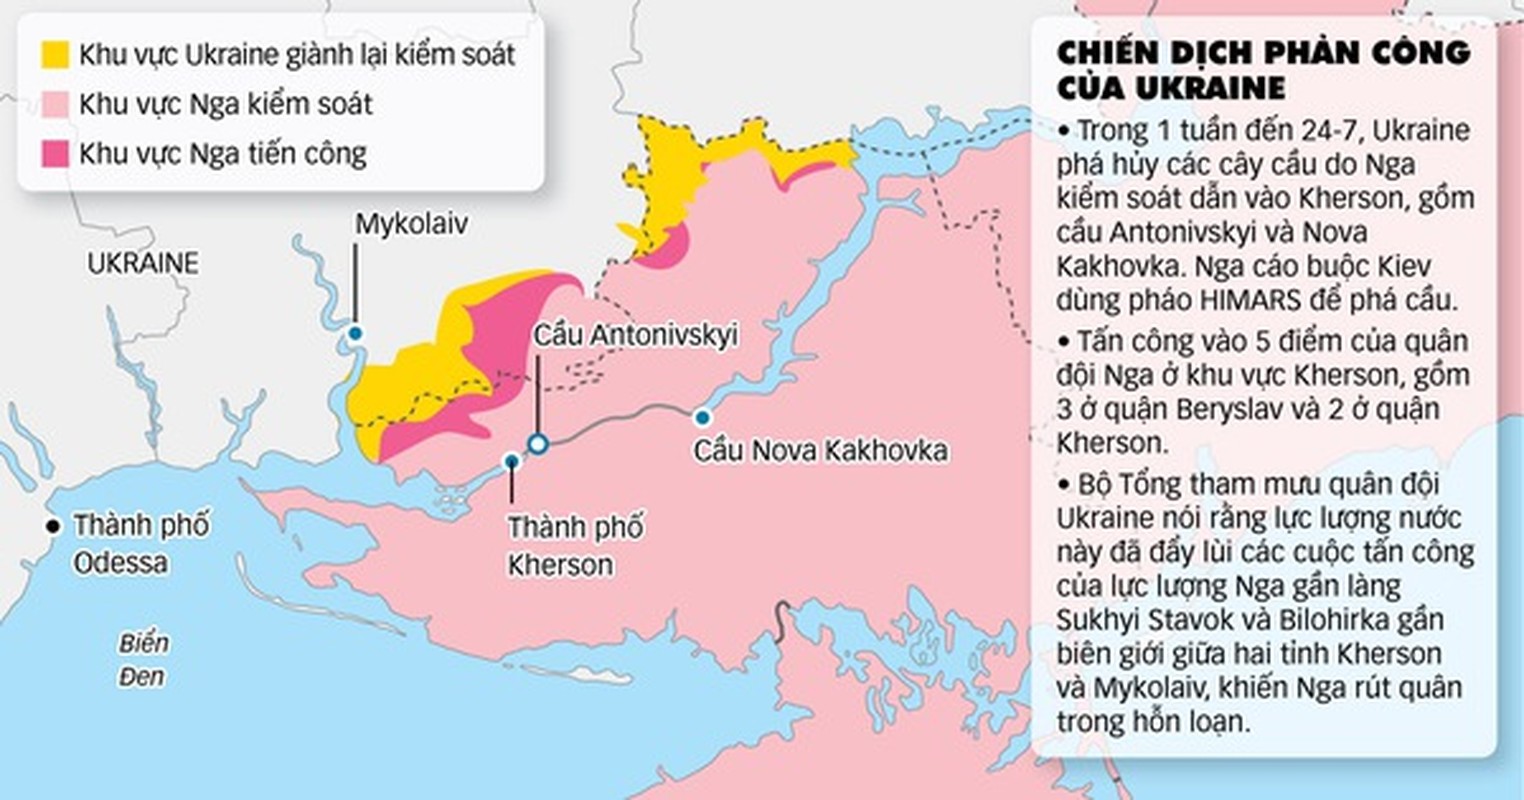 Kherson ac liet: Ukraine phao kich du doi, Nga giu vung phong tuyen-Hinh-8